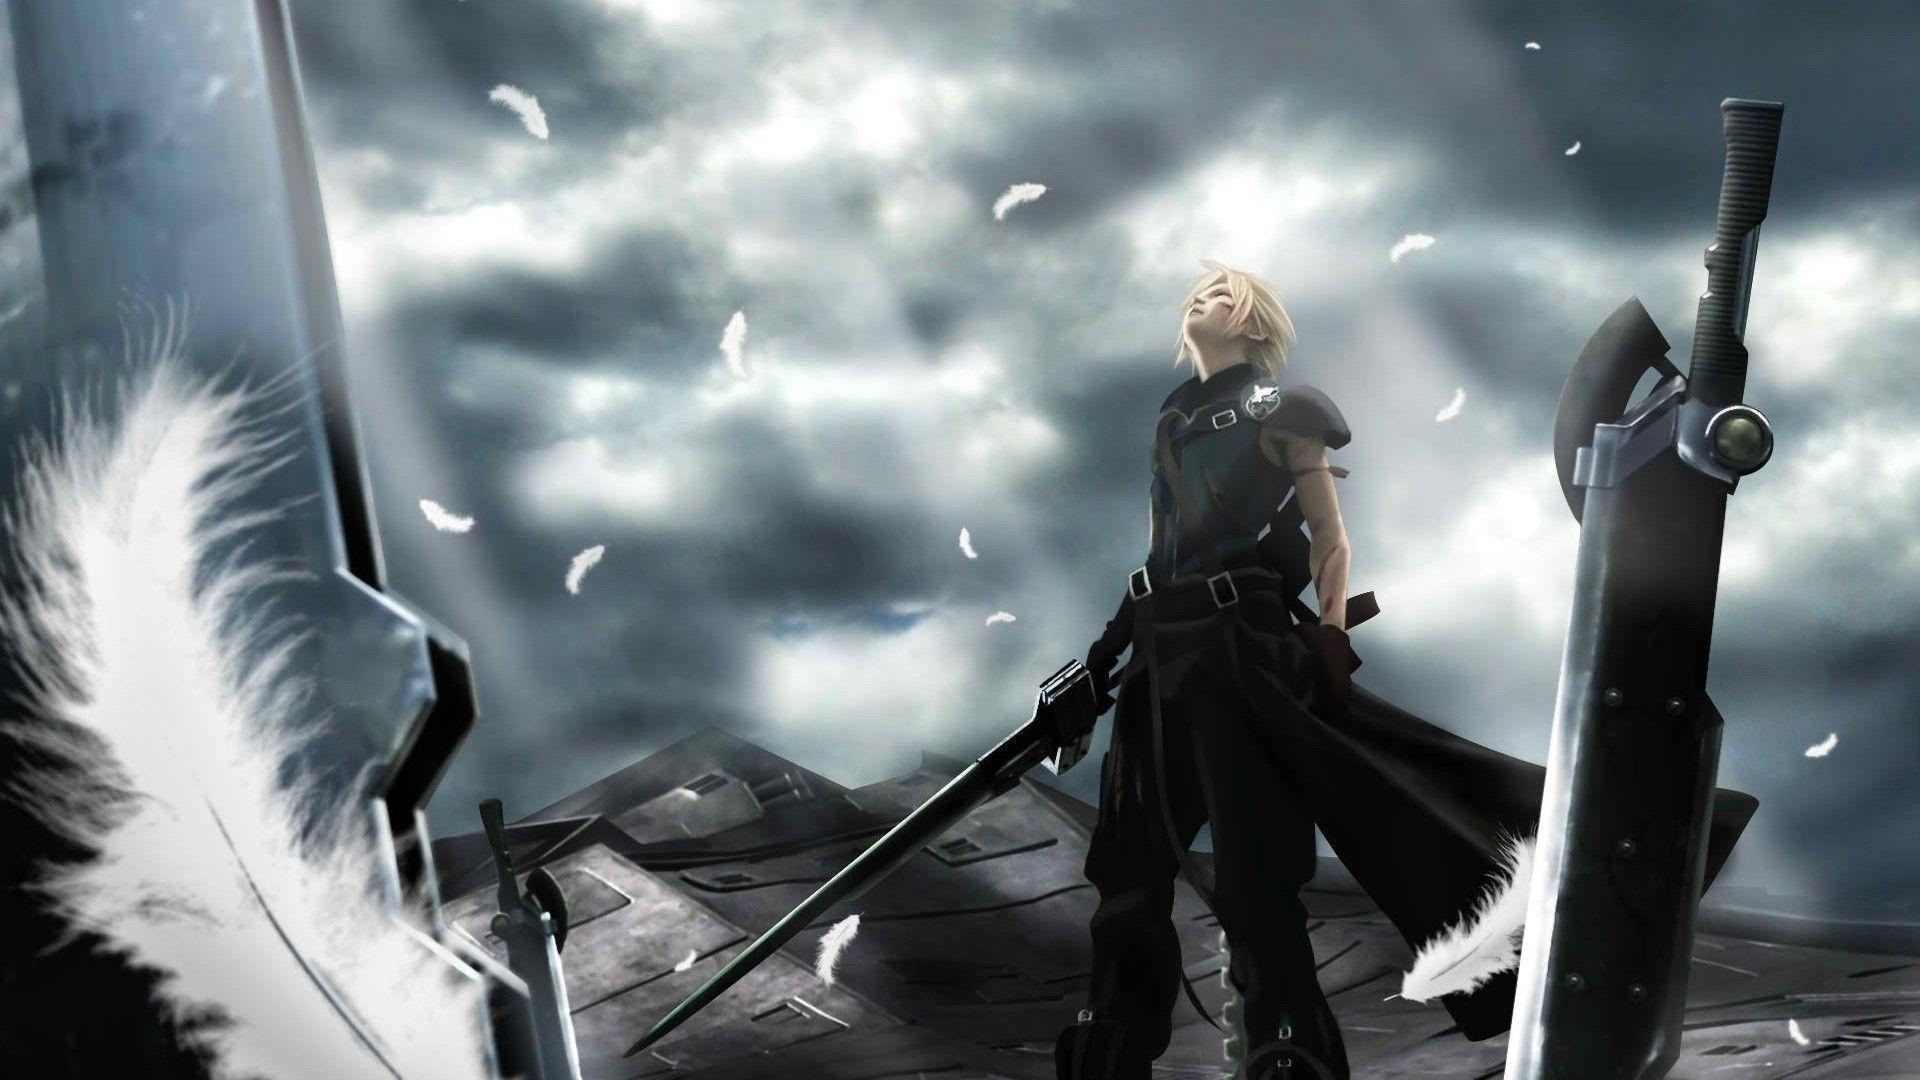 Free Download Final Fantasy 7 Wallpaper